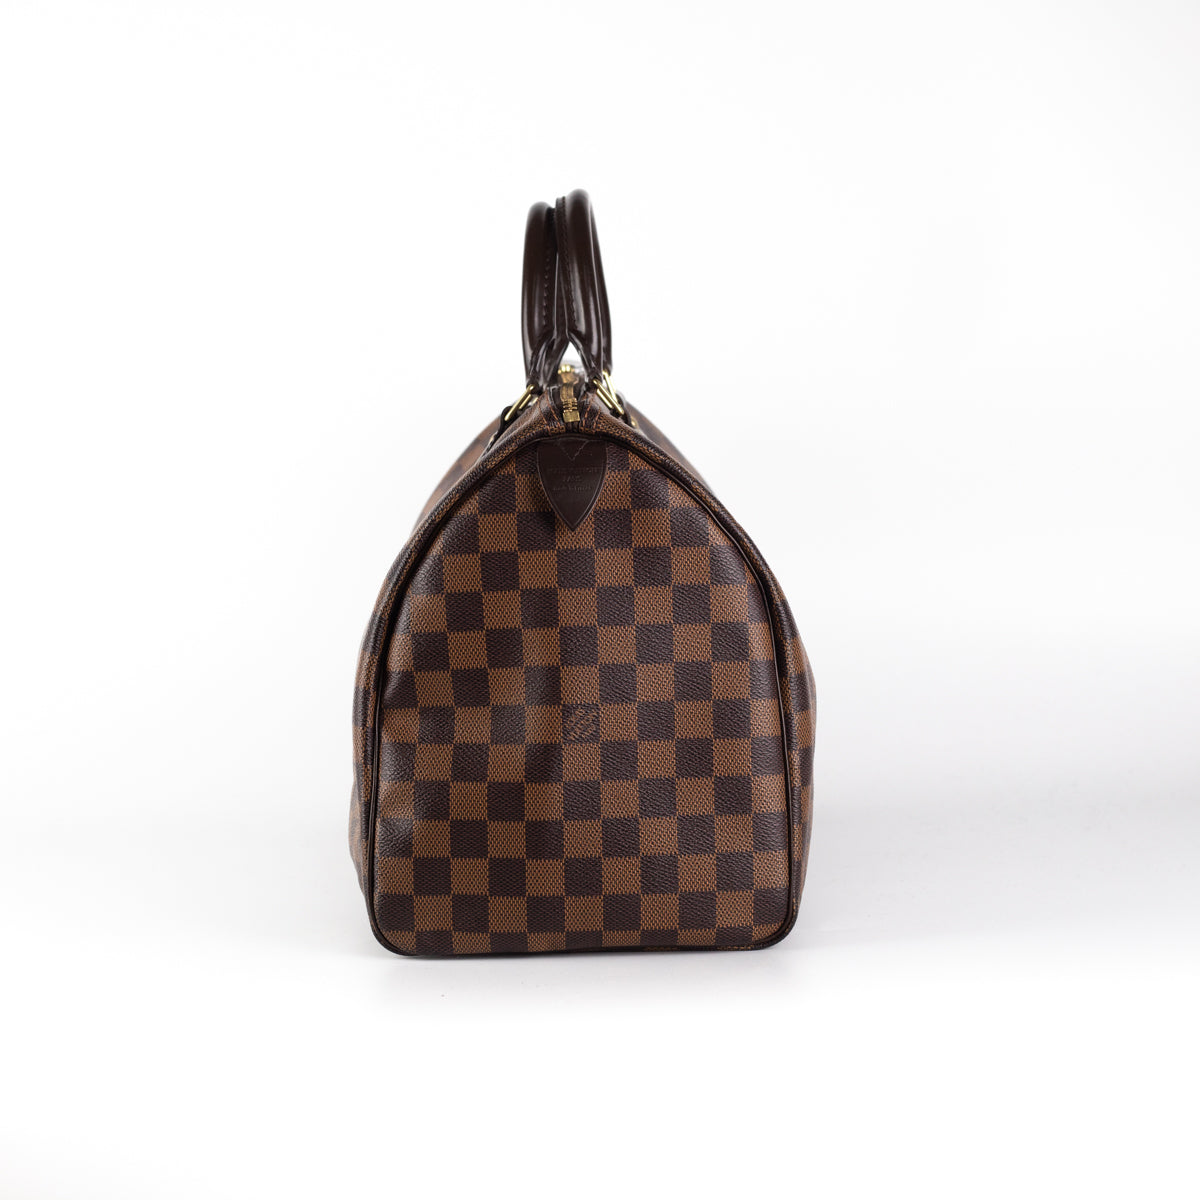 ❤️‍🩹SOLD❤️‍🩹 Louis Vuitton Speedy 35 Damier Ebene Handbag